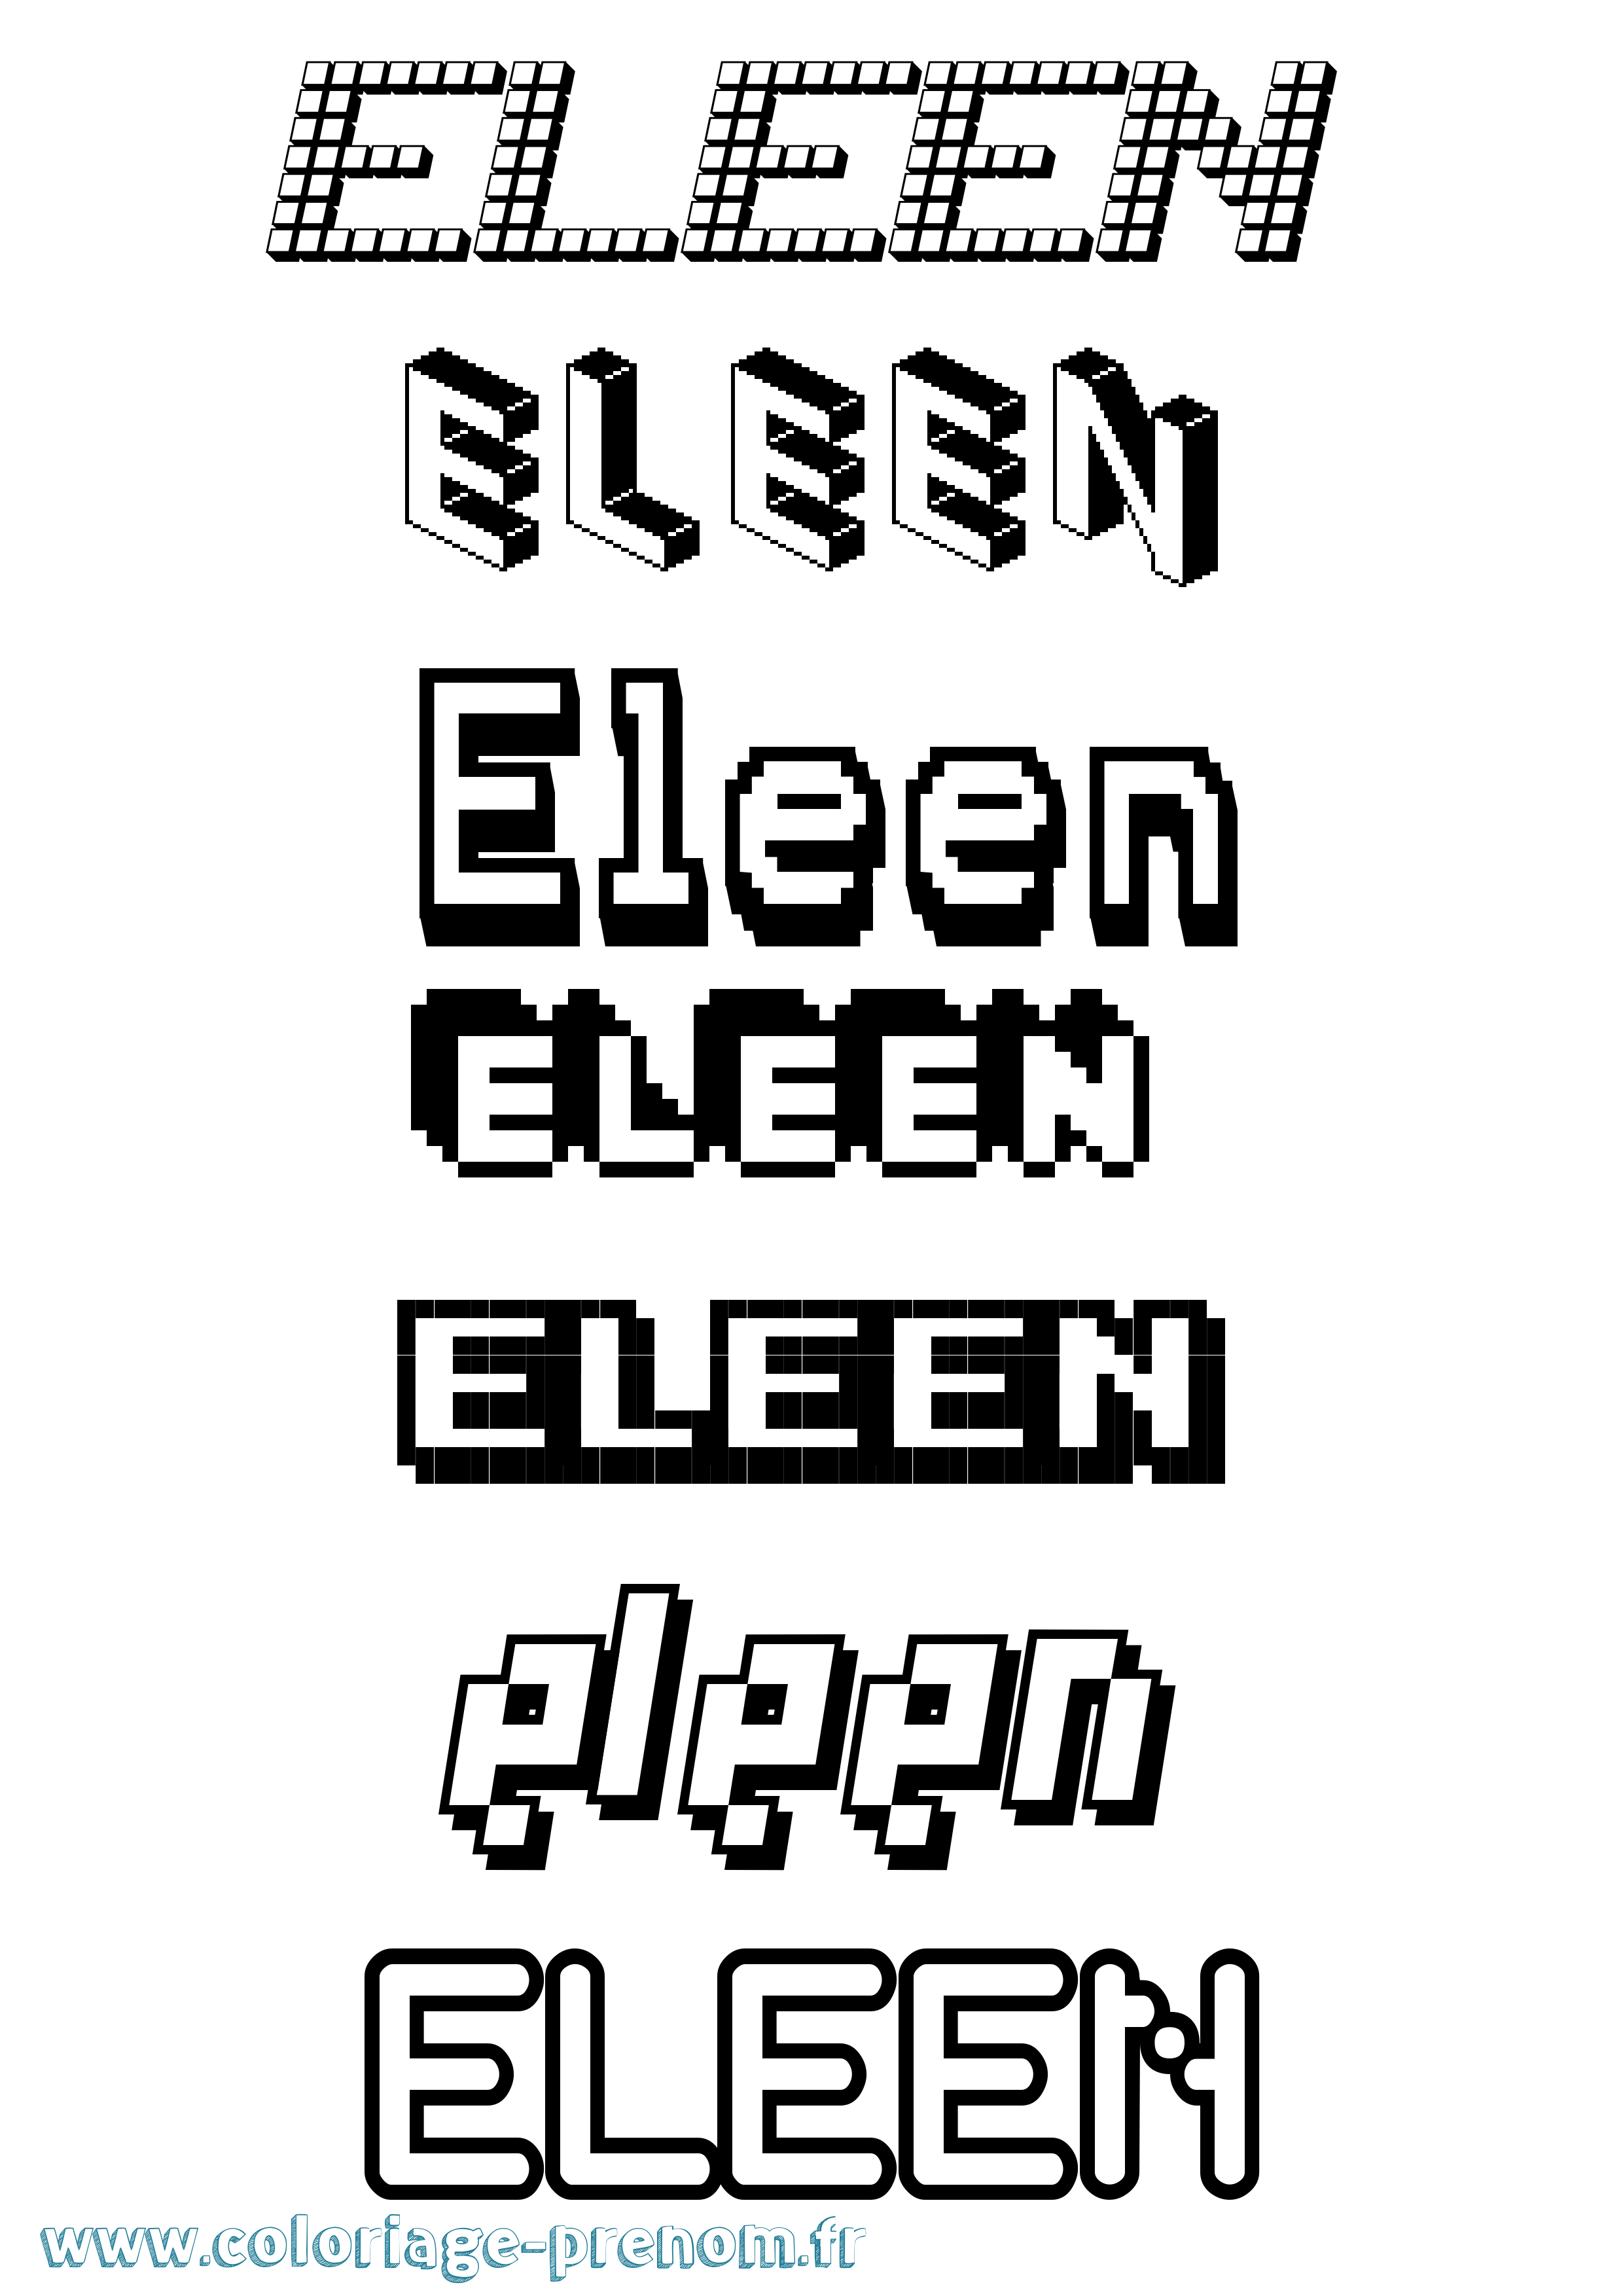 Coloriage prénom Eleen Pixel